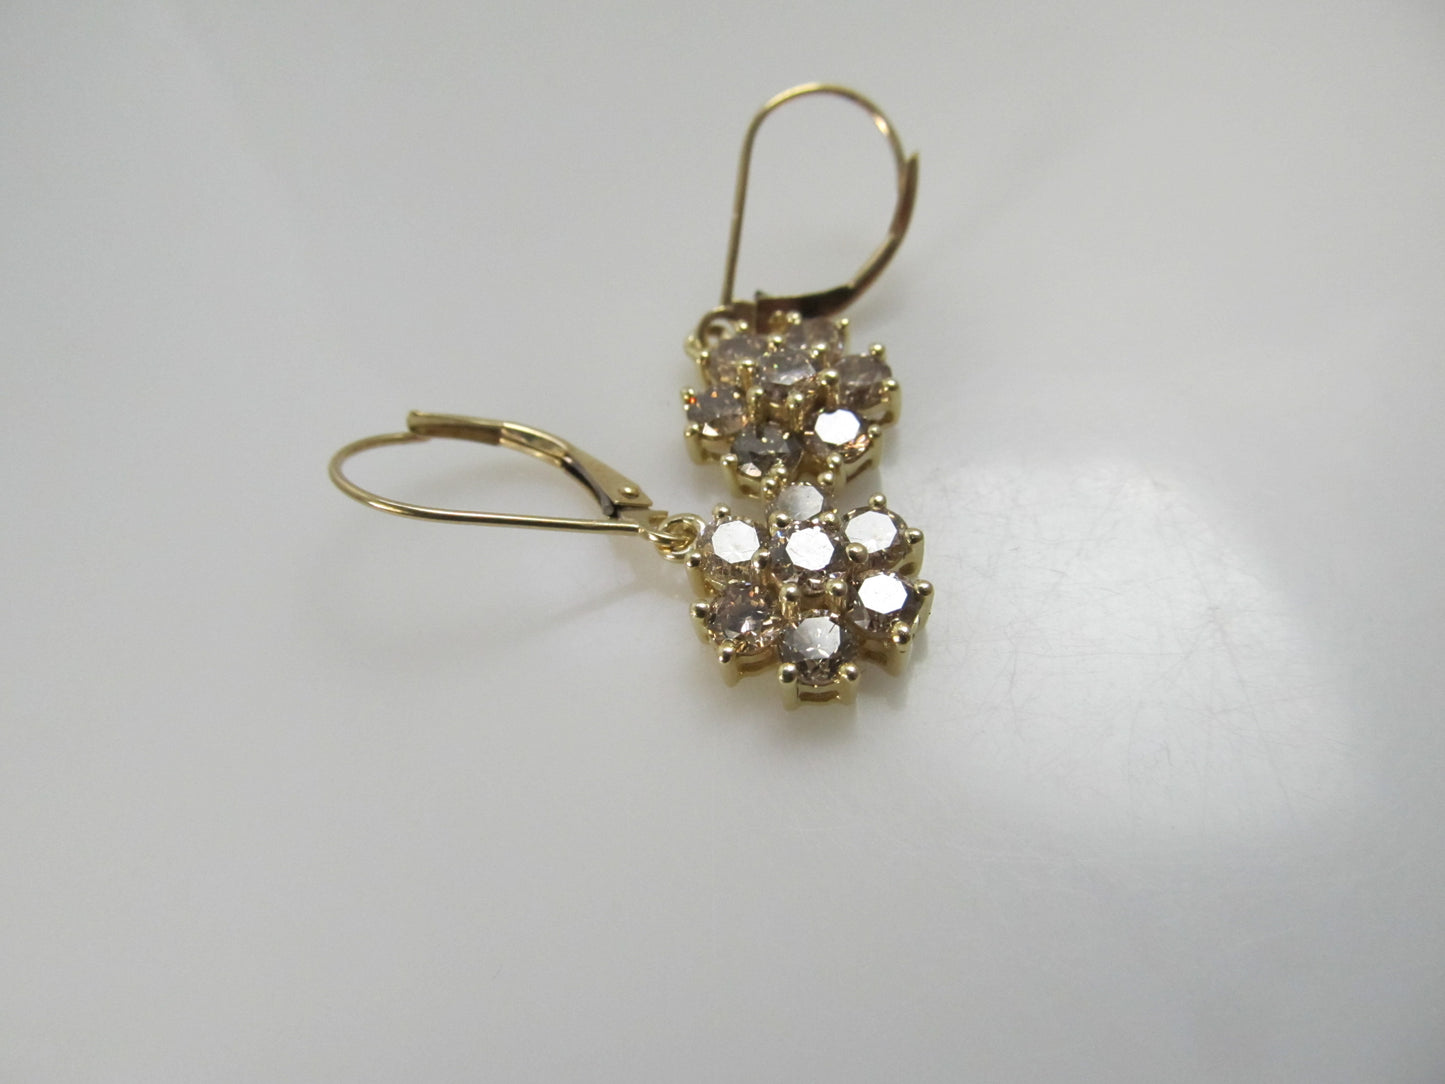 1.50ct pretty light brown diamond flower earrings